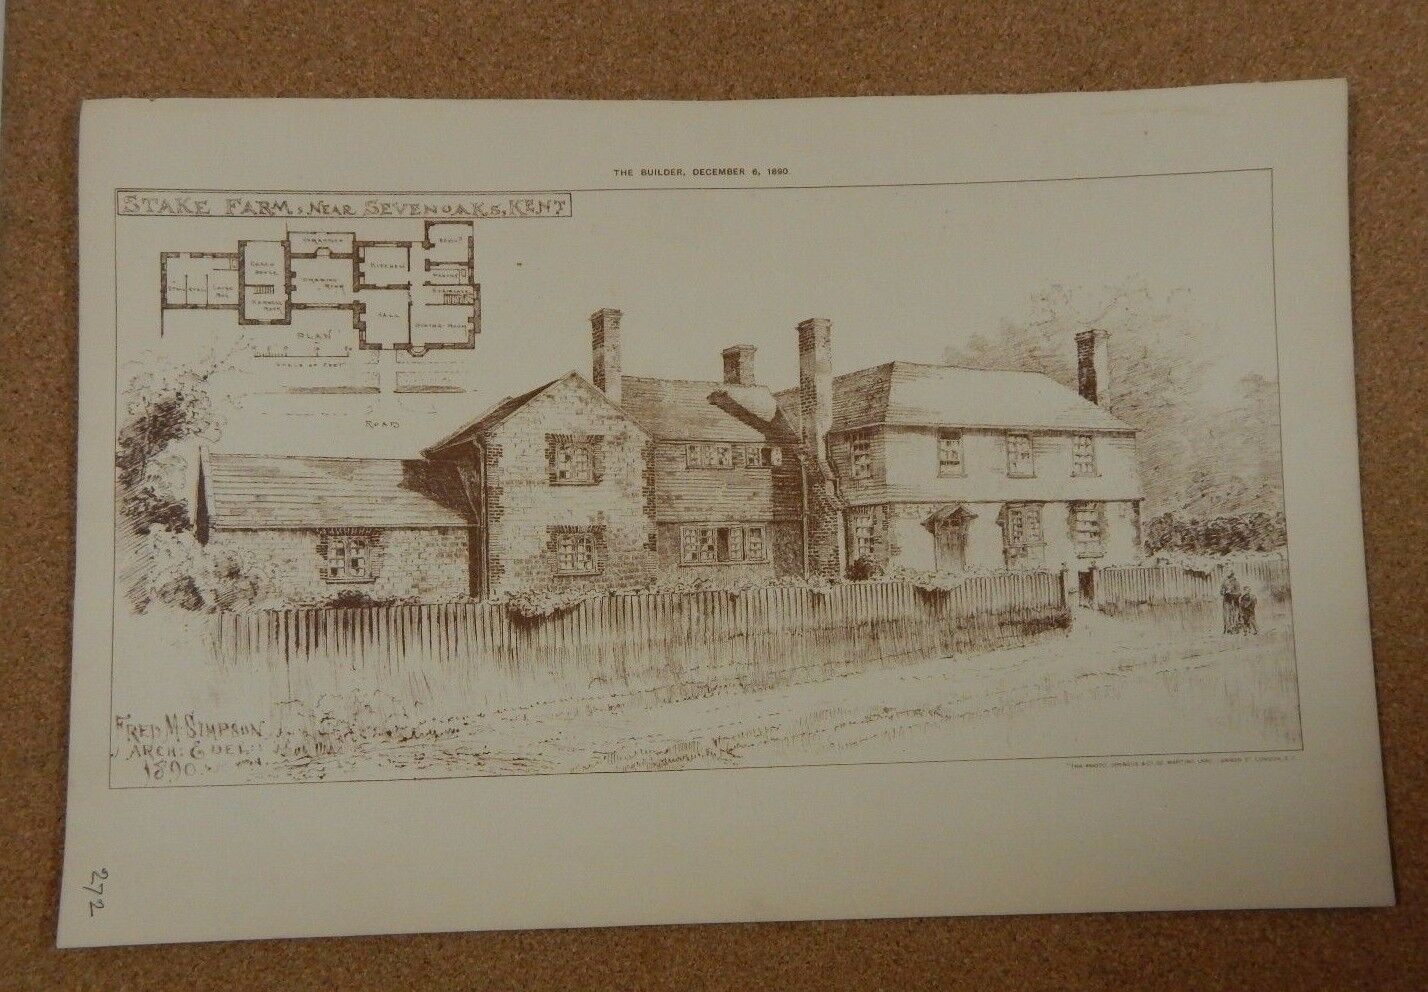 Antique Architects Print Stake farm Nr Sevenoaks The builder 1890